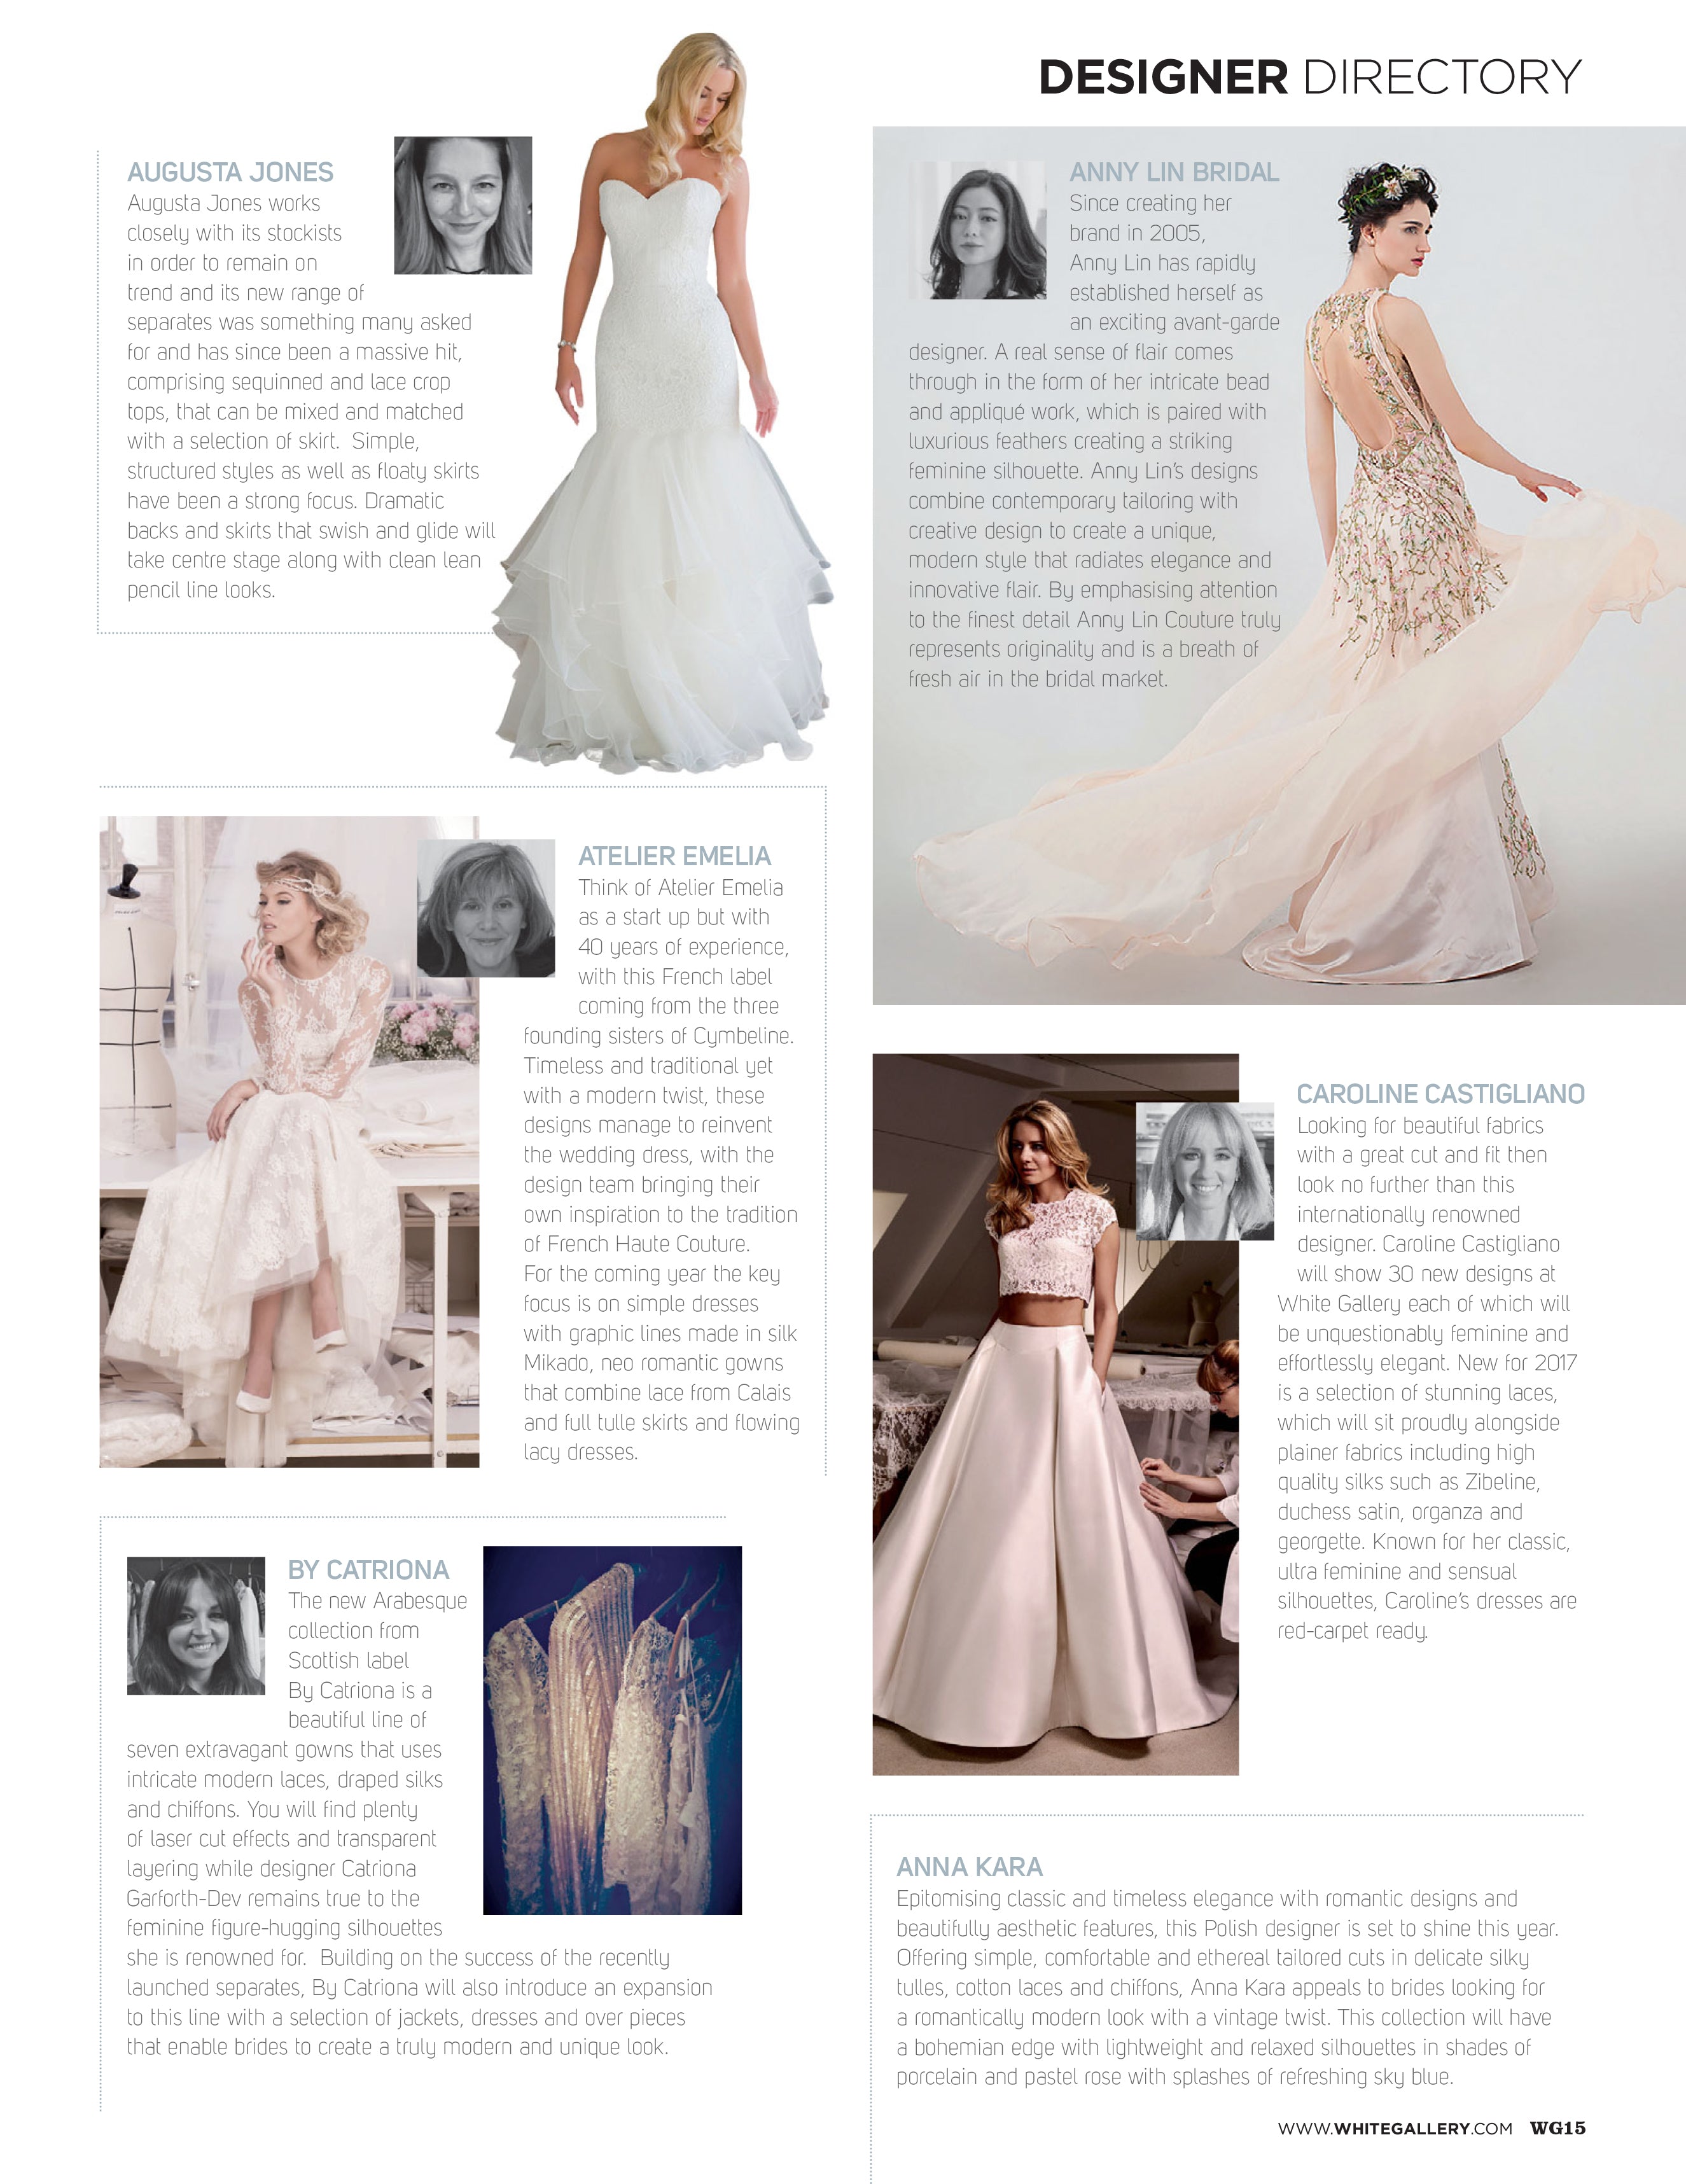 BRIDAL BUYER WHITE GALLERY designer wedding dresses by Caroline Castigliano